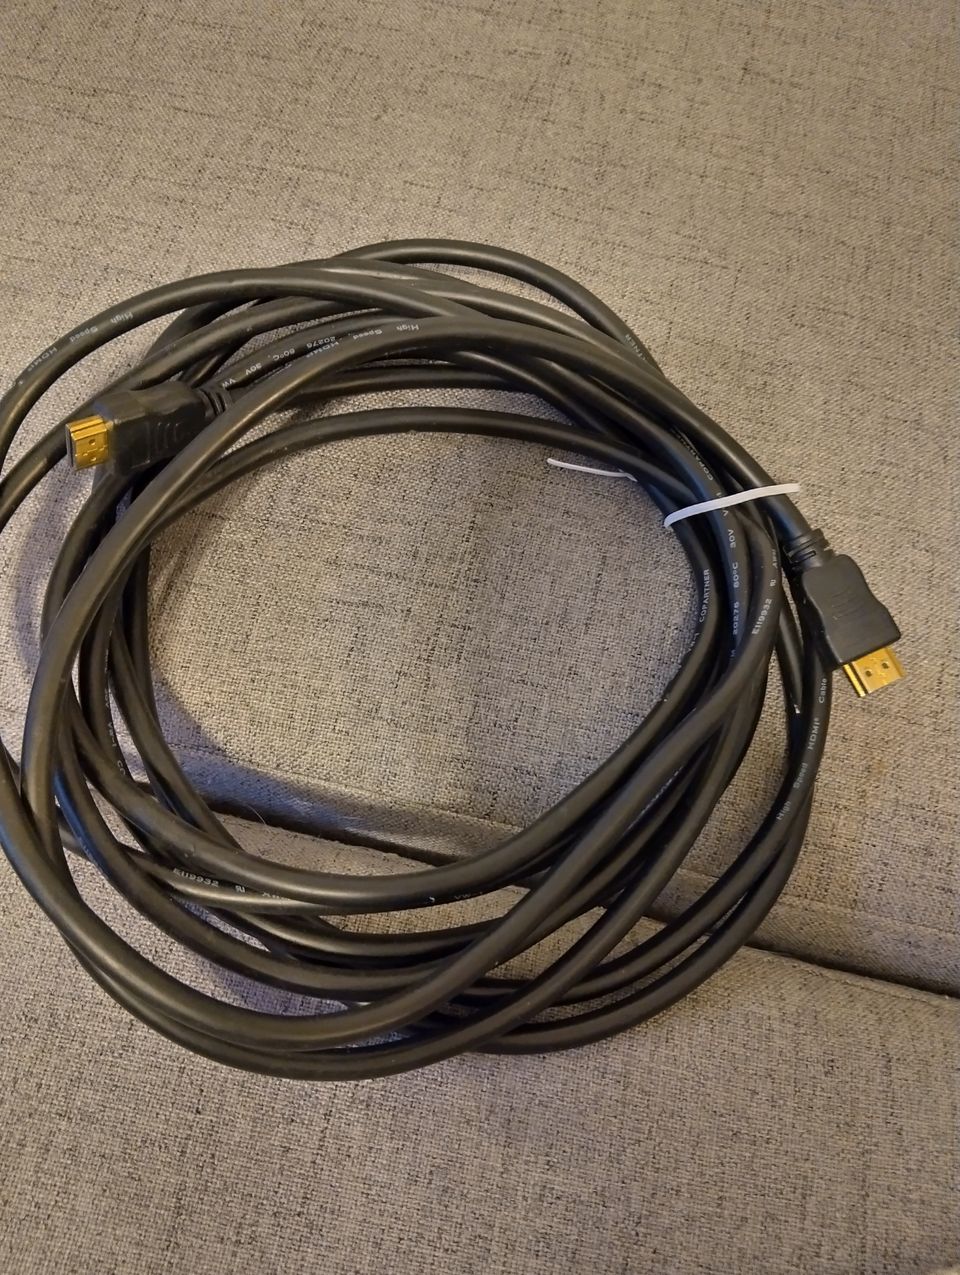 HDMI kaapeli, 4,5m pitkä